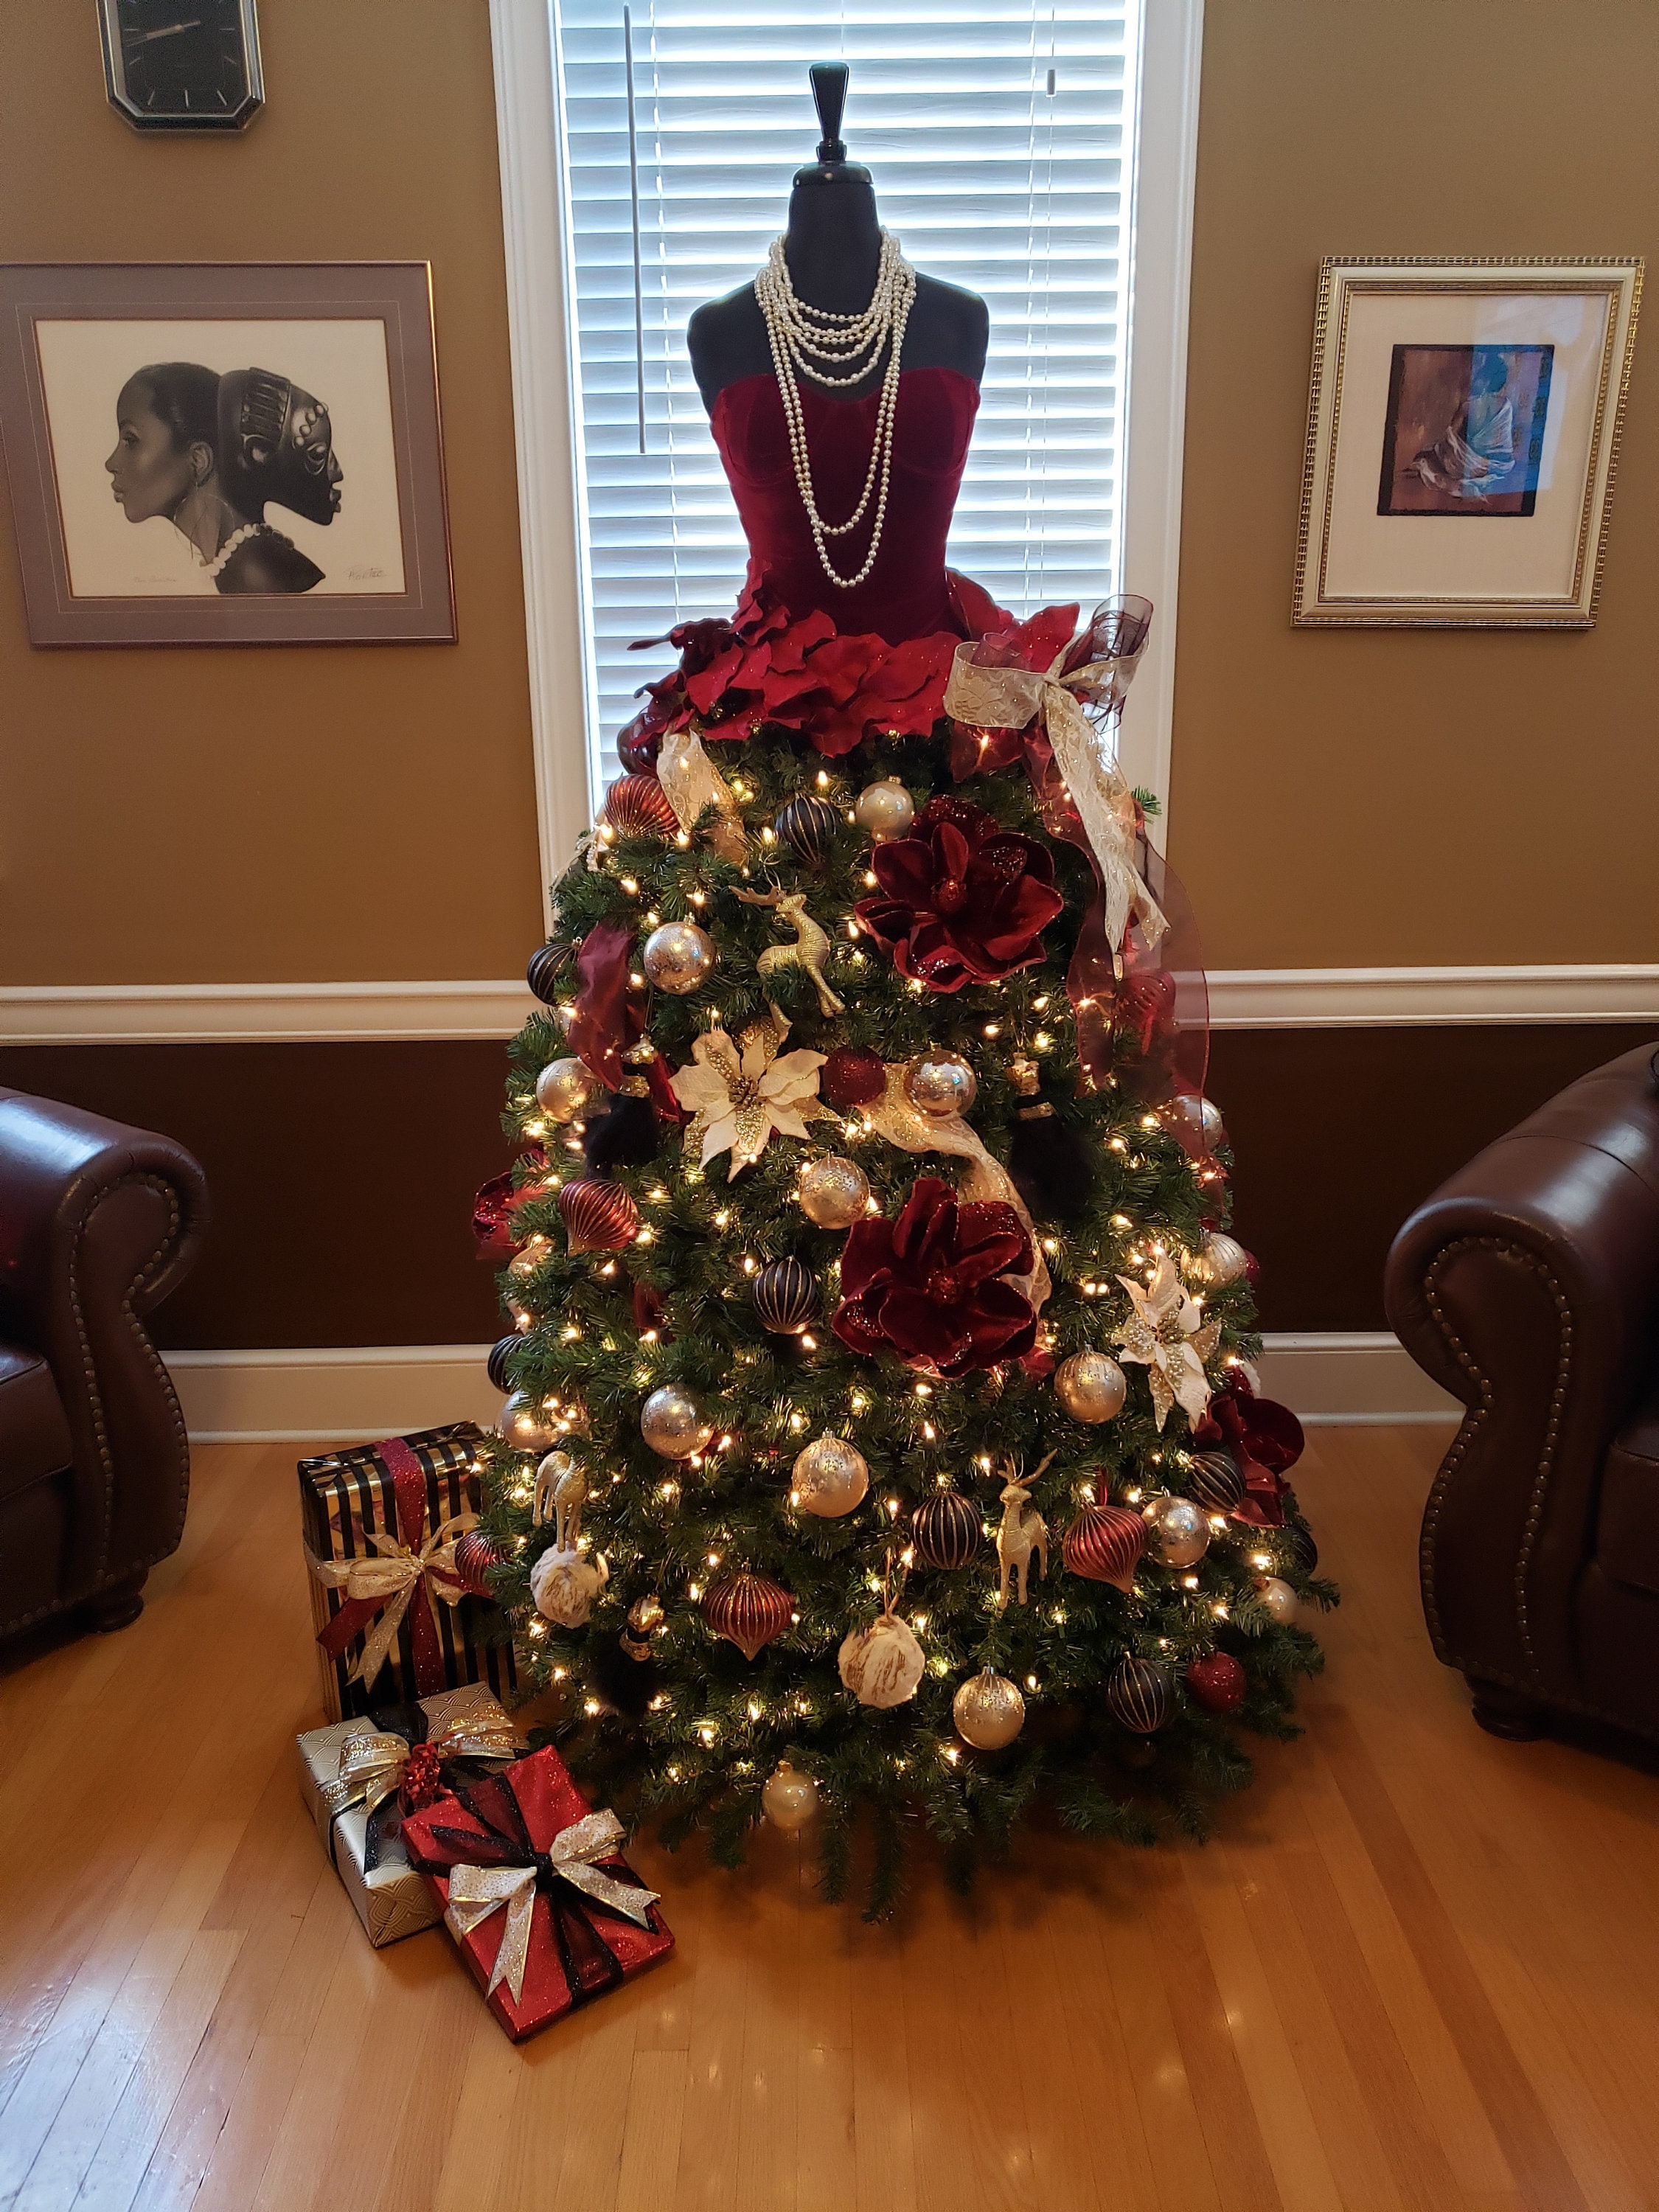 Dress Form DIY Mannequin Christmas Tree Tutorial - Video